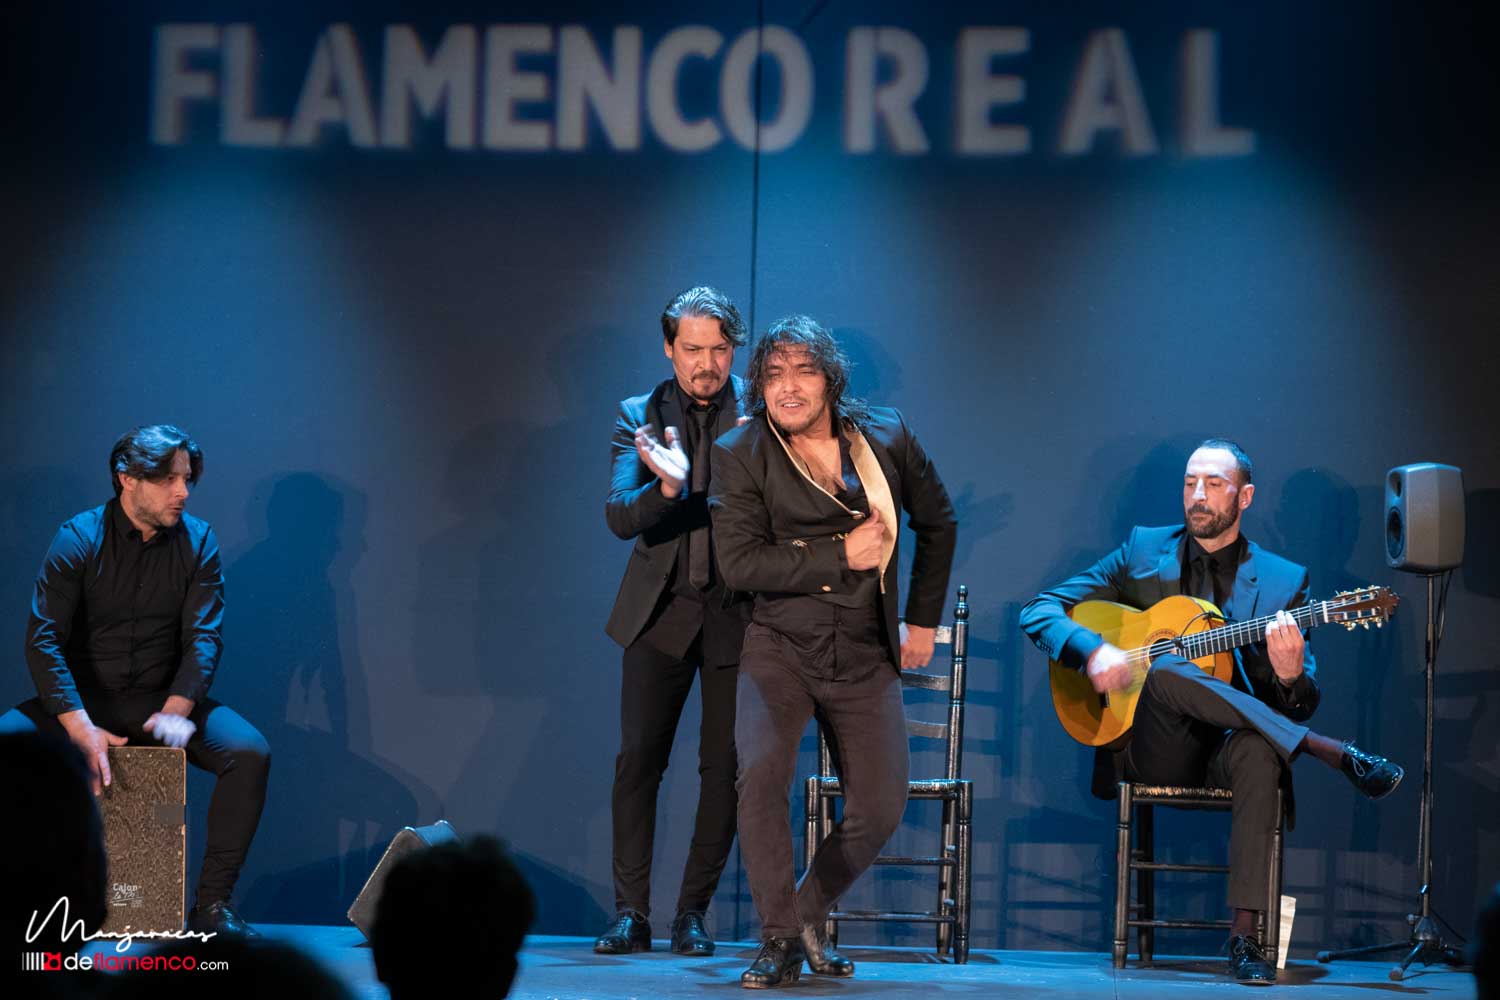 Iván Vargas - Flamenco Real